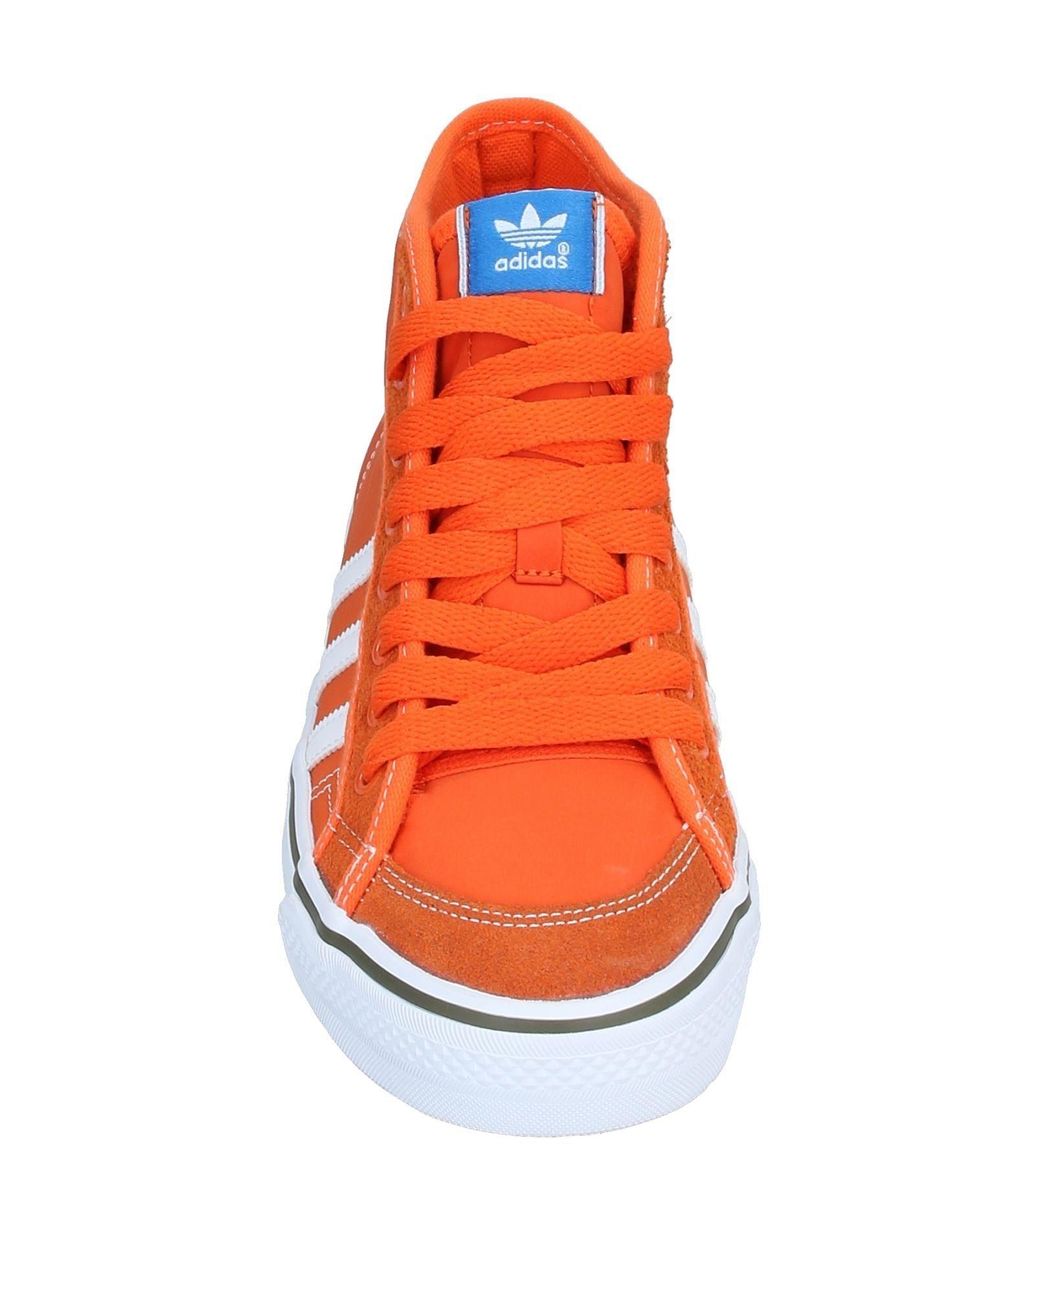 adidas Originals High-tops & Sneakers in Orange for Men | Lyst